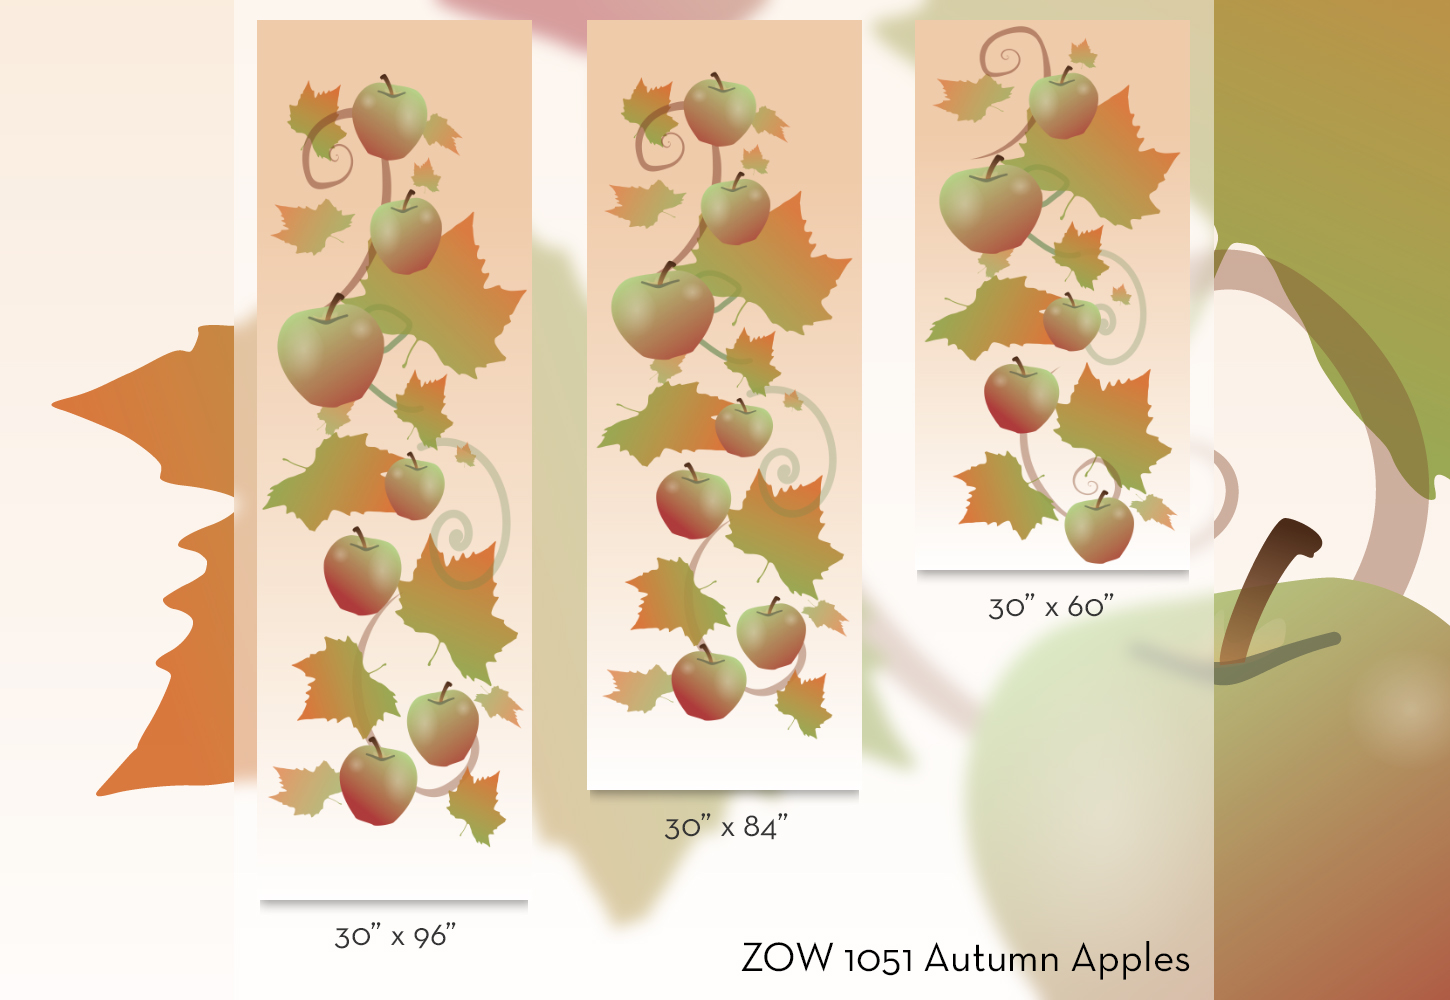 ZOW 1051 Autumn Apples